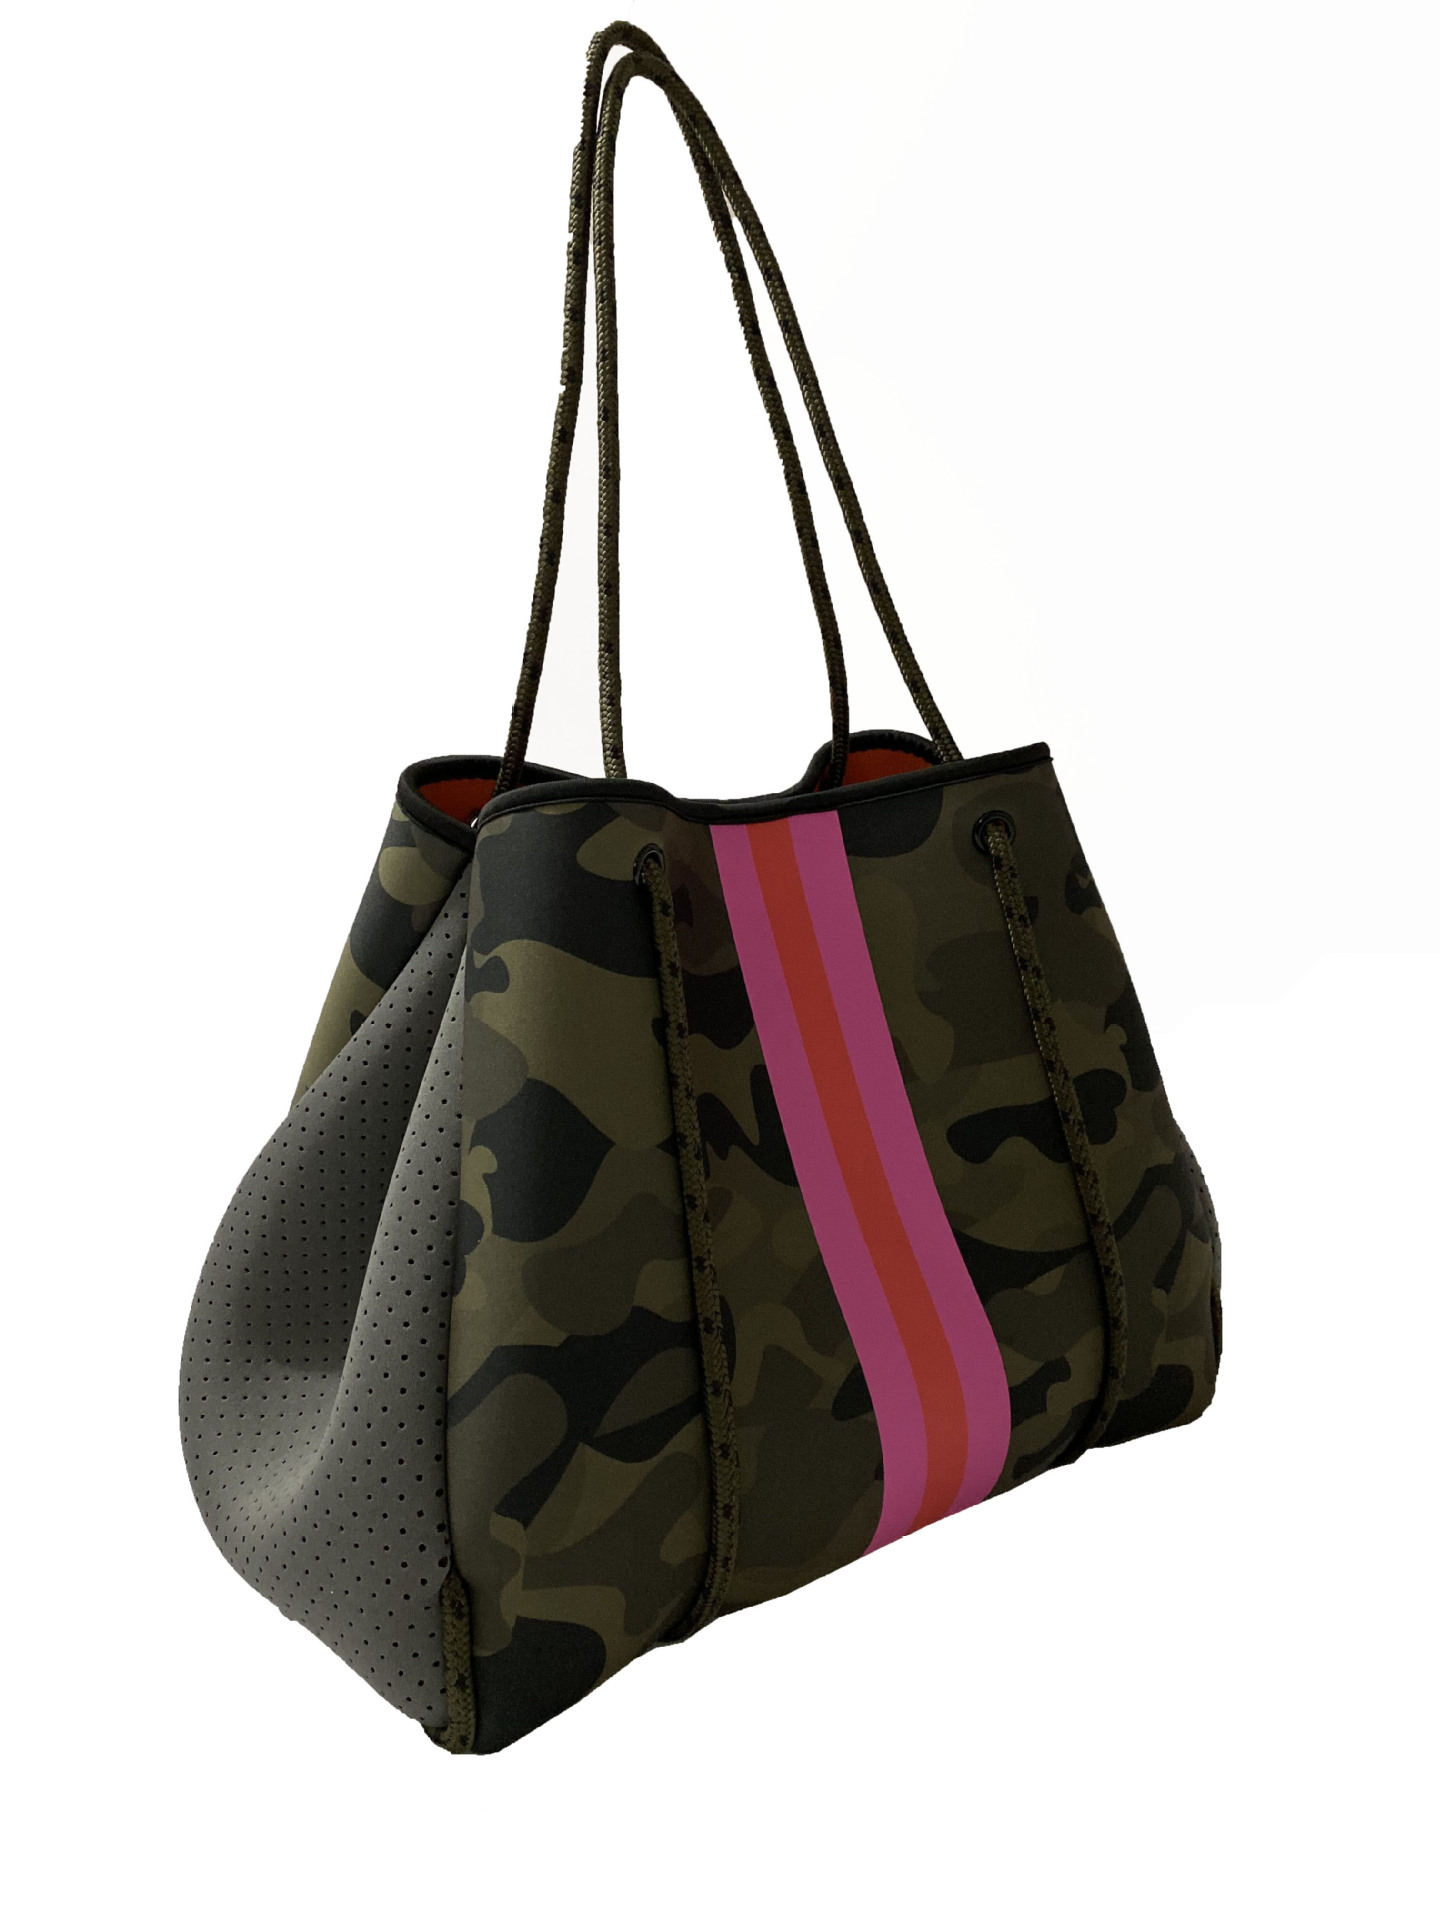 Camouflage Pattern Tote Bag, Neoprene Summer Beach Bag